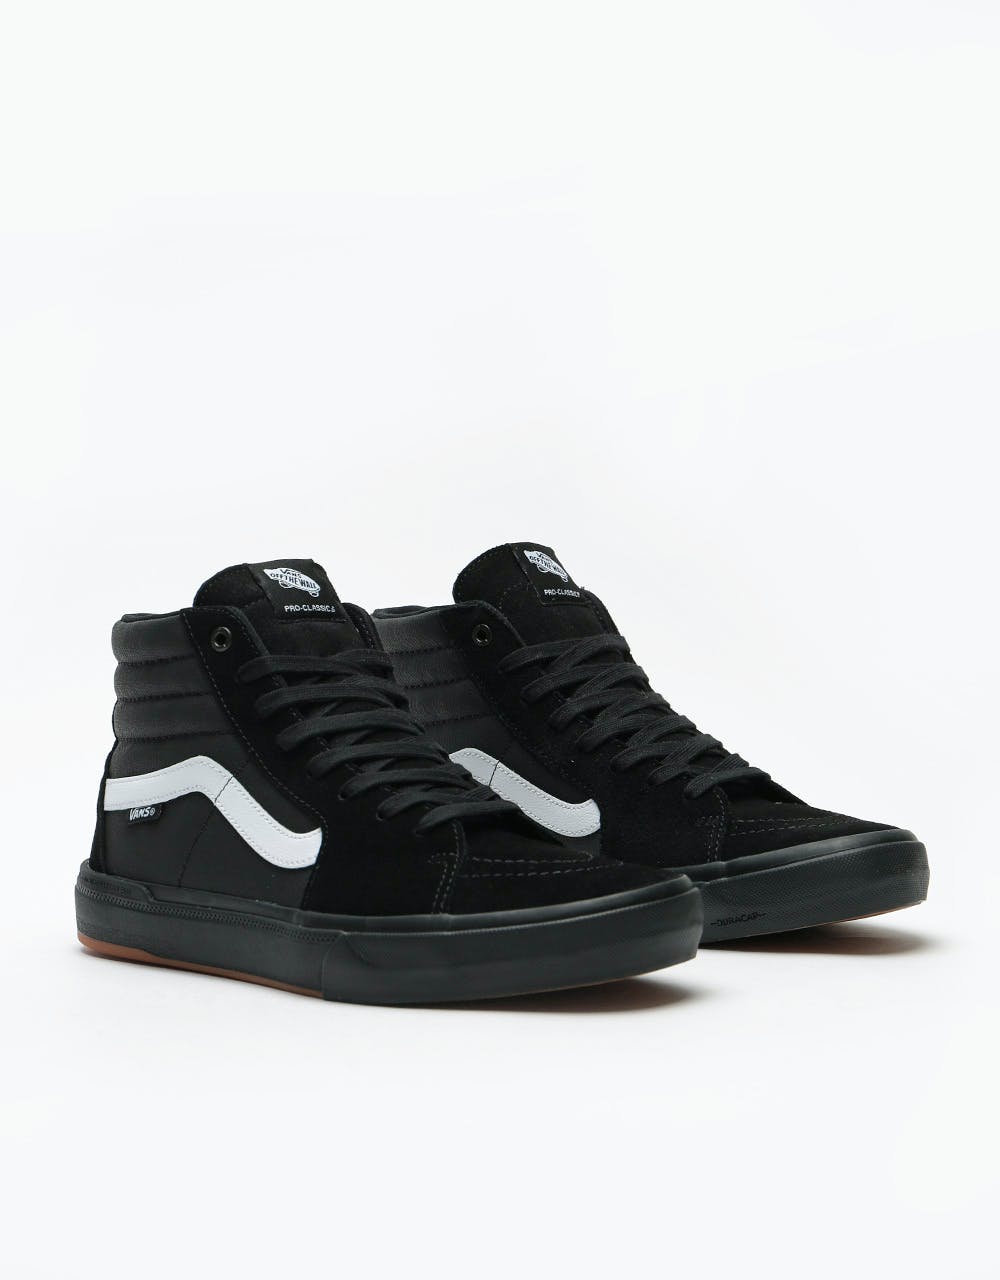 Vans Sk8-Hi BMX Skate Shoes - Black/White